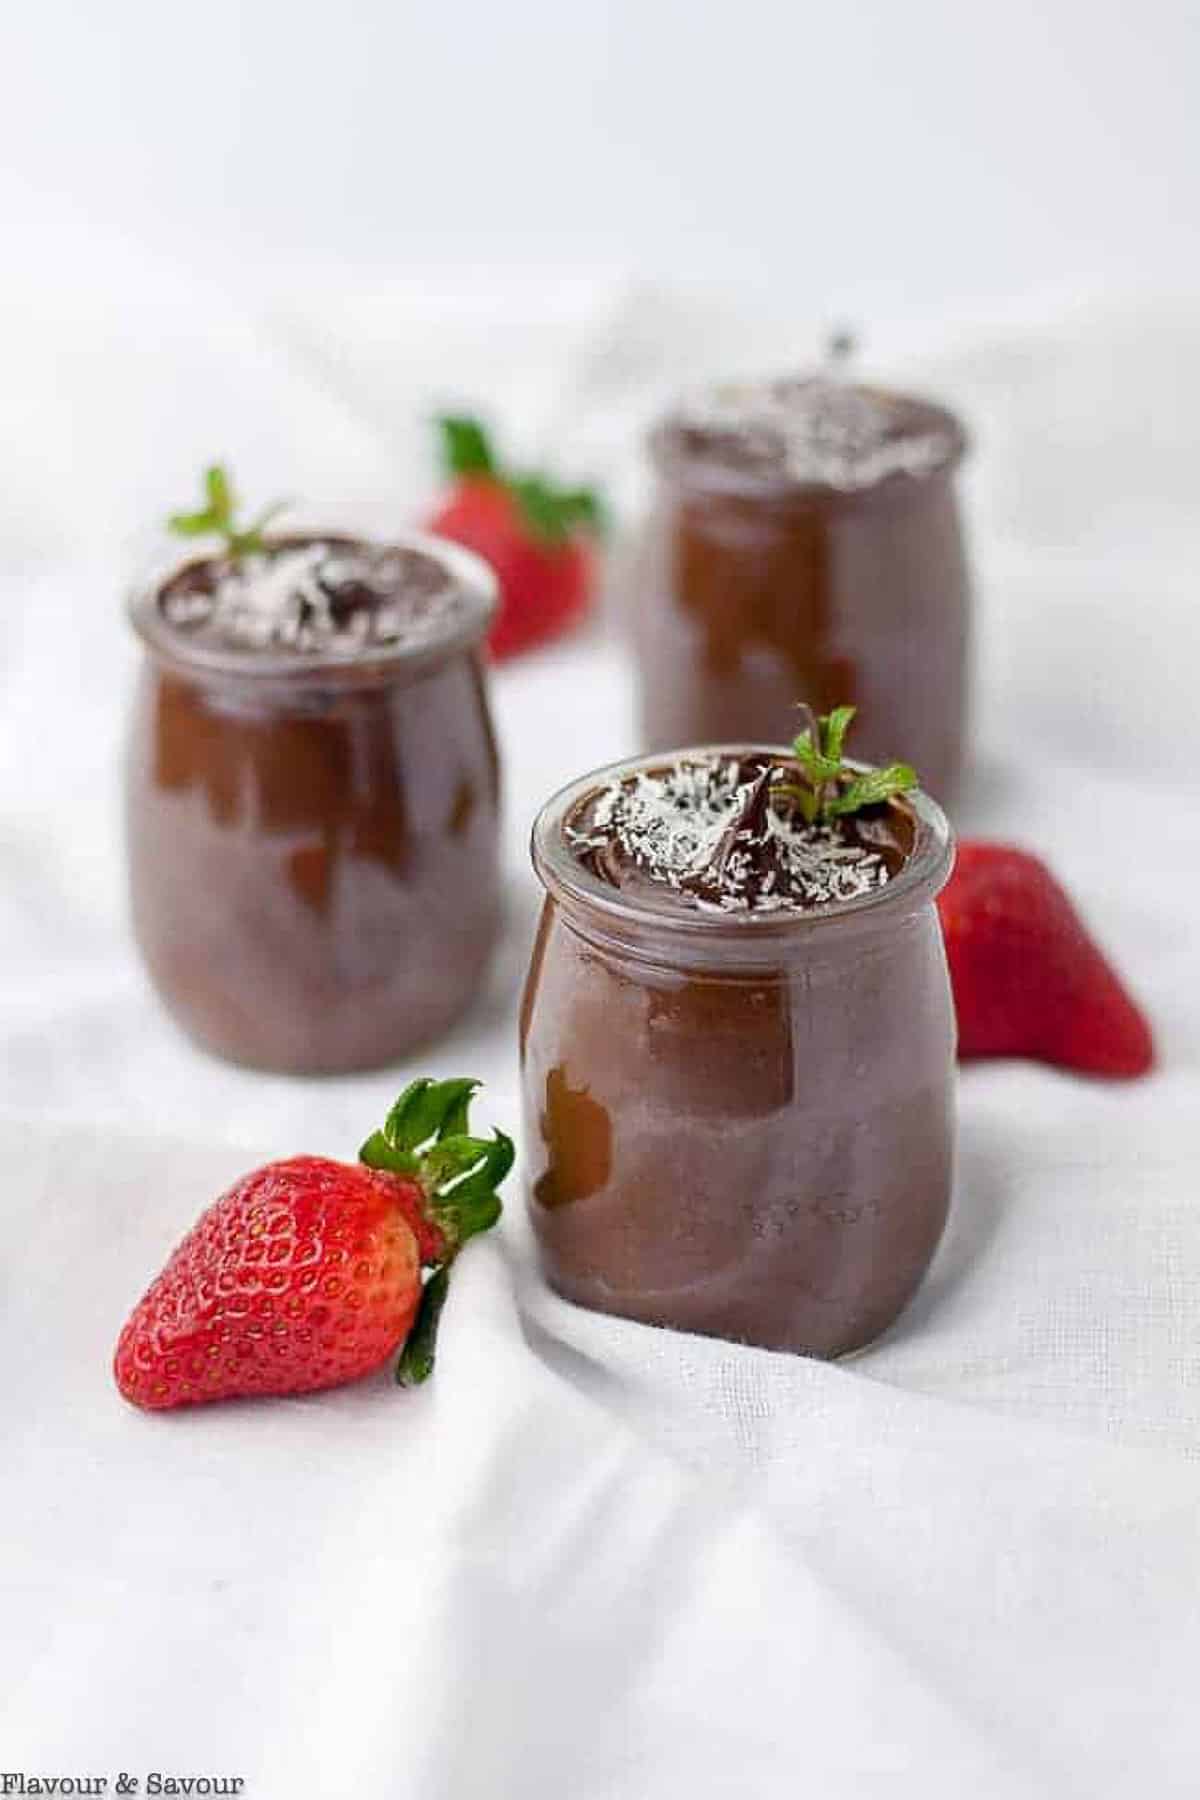 Tiny dessert jars with vegan chocolate mousse